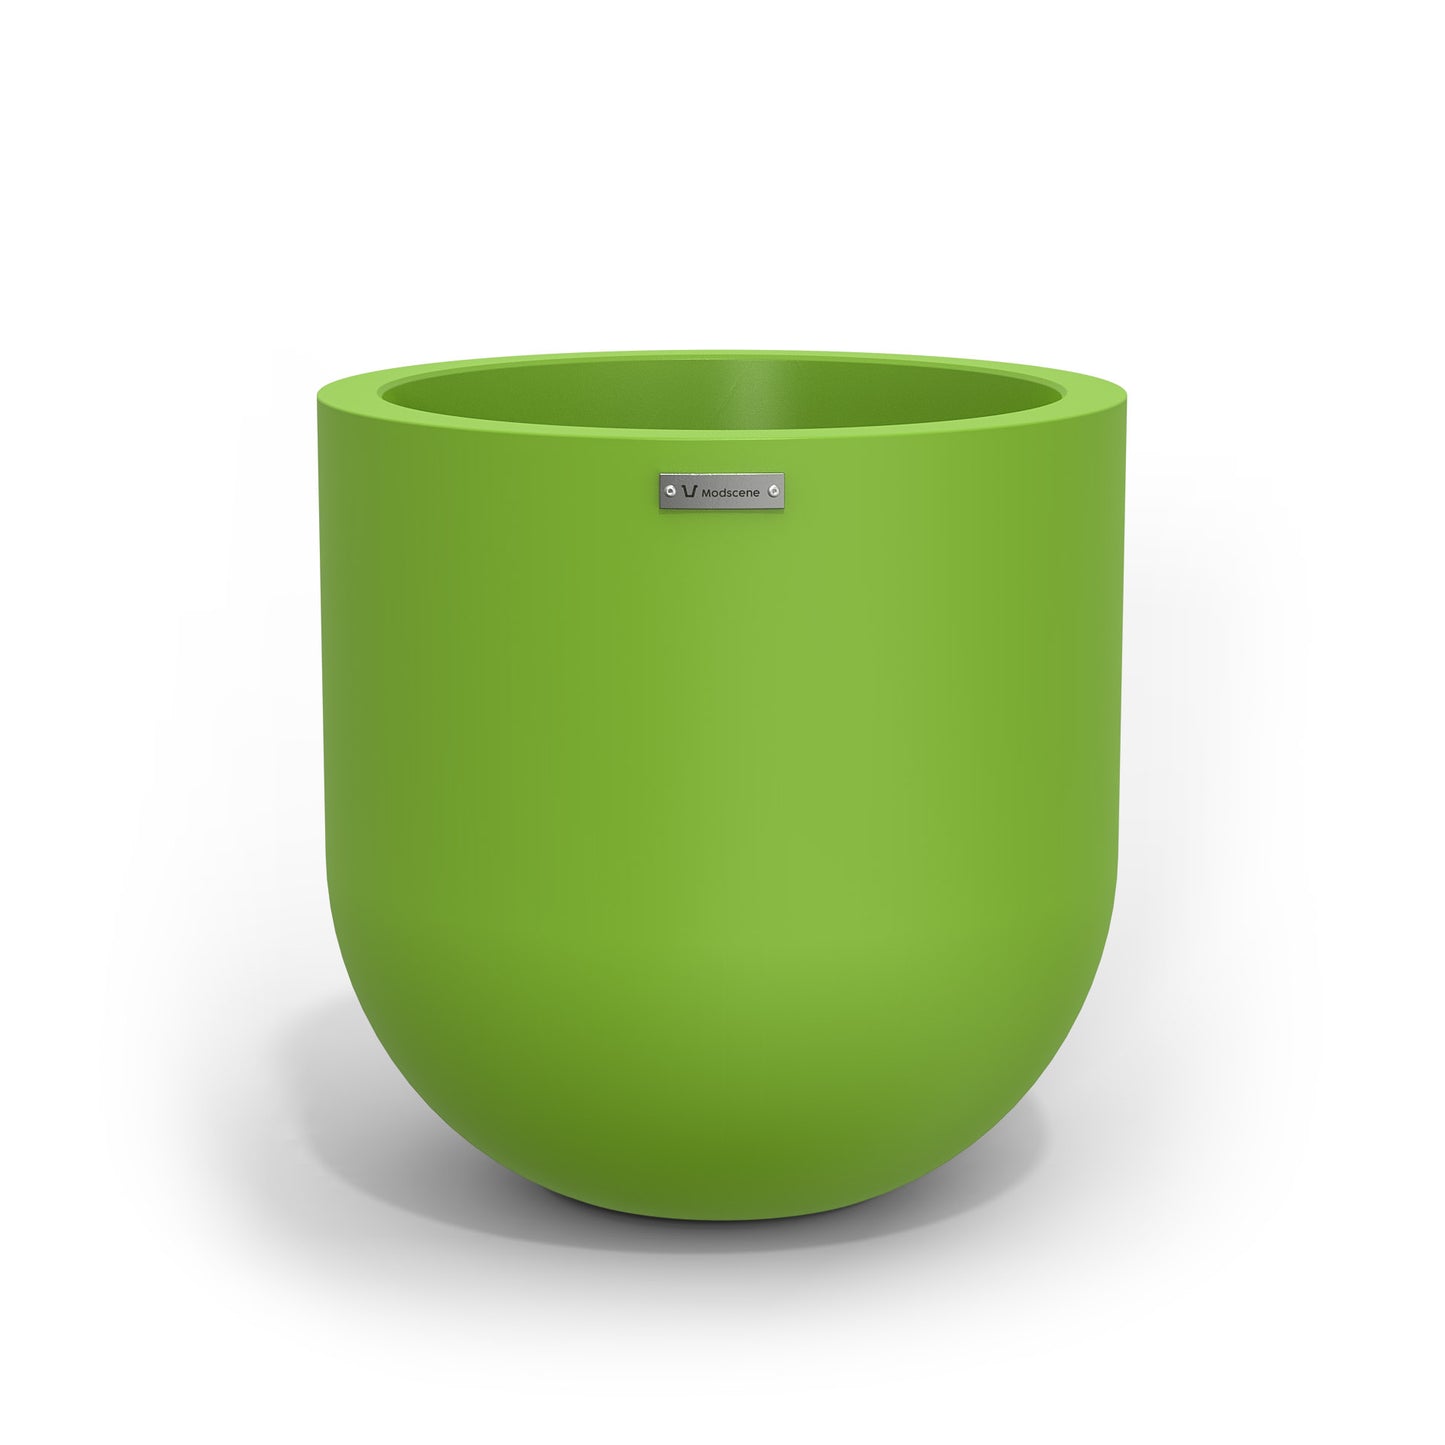 A medium sized green planter pot made by Modscene.